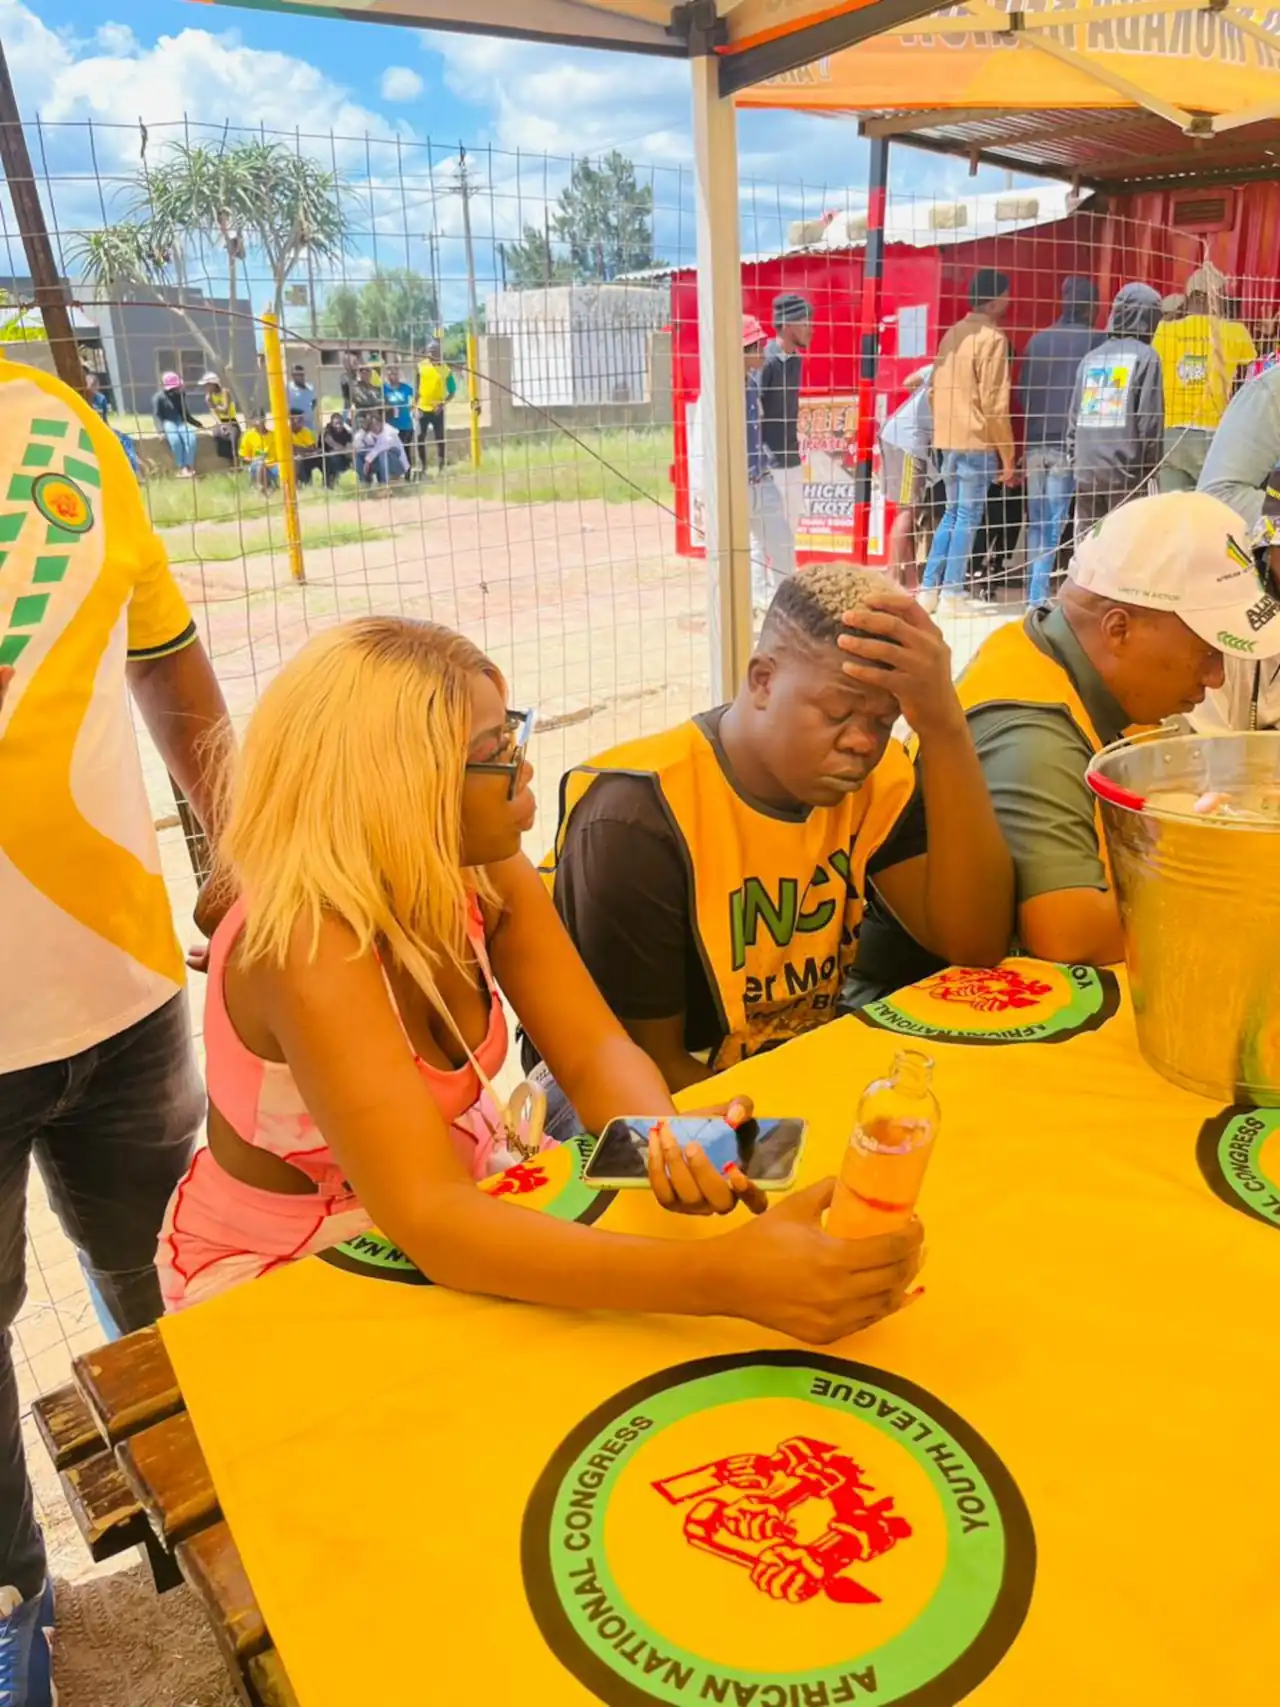 ANC Faces Backlash Over Skomota Campaign